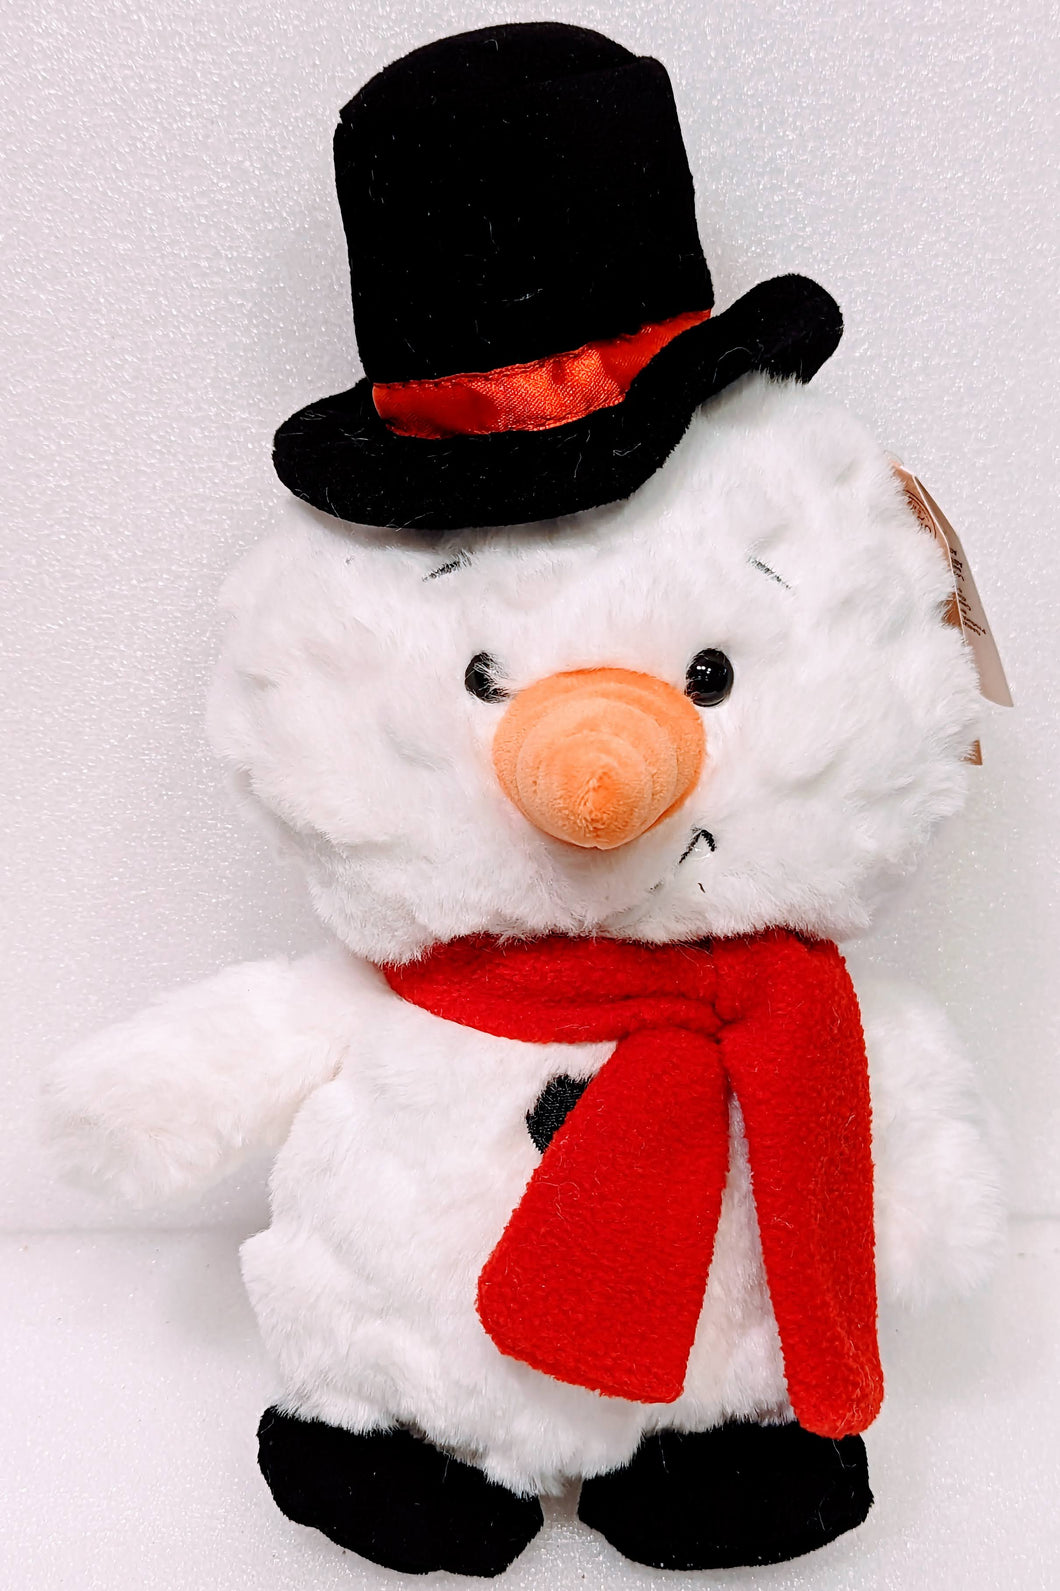 Plush Snowman Wearing Black Top Hat & Red Scarf